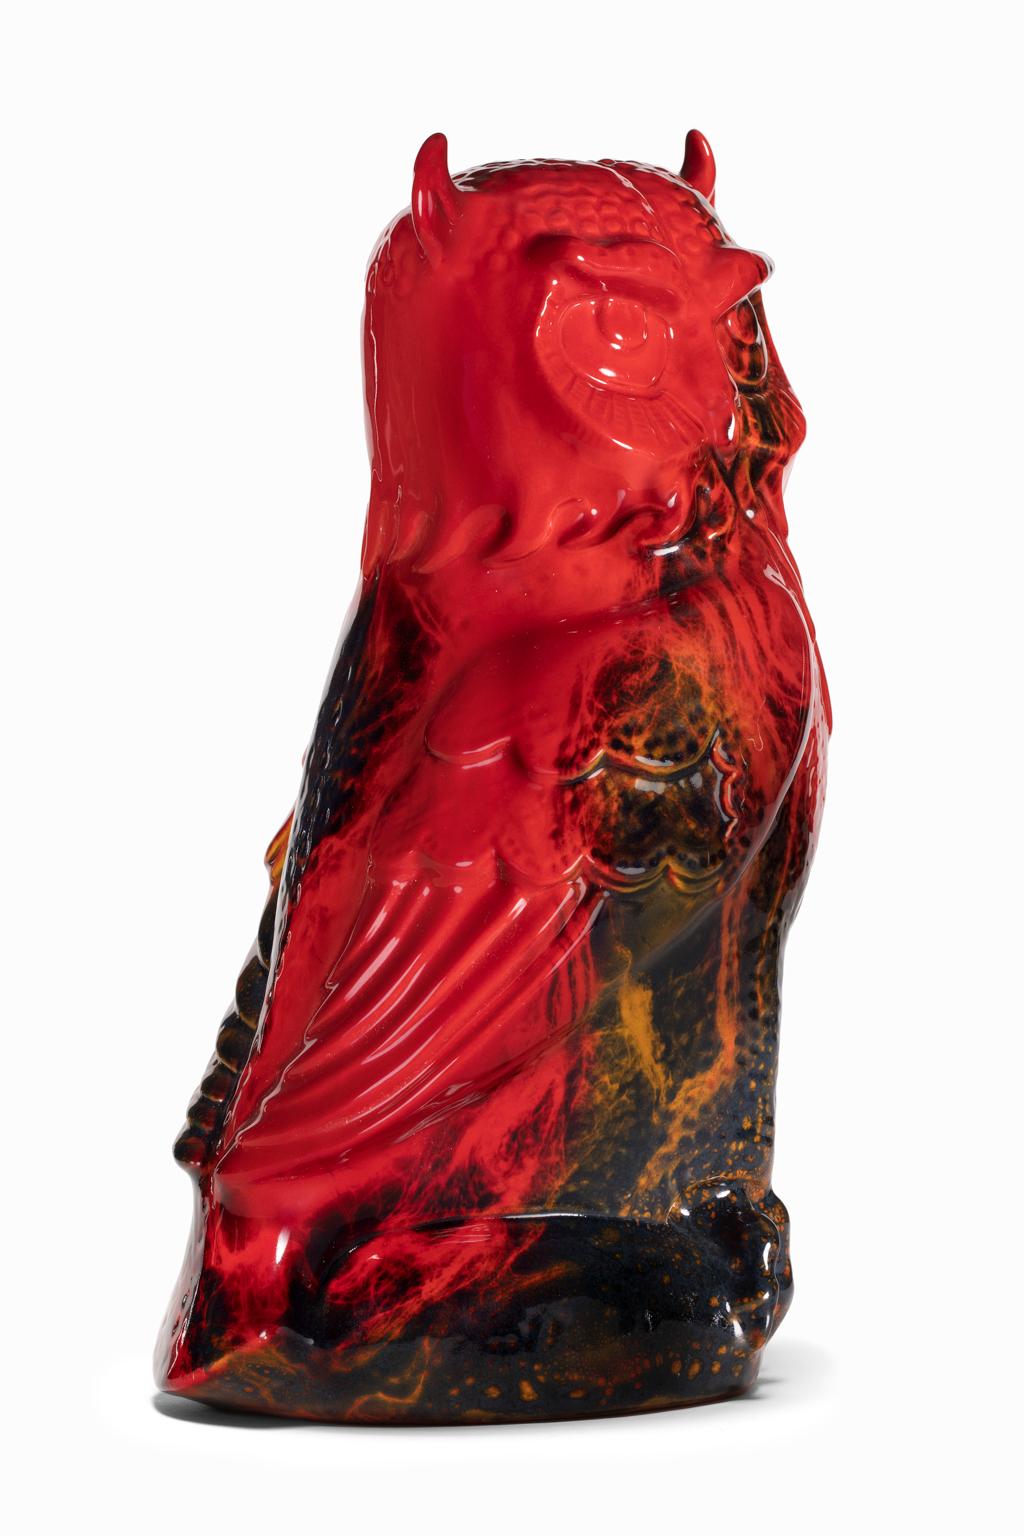 Glazed Royal Doulton Red Flambe Porcelain Figurine 